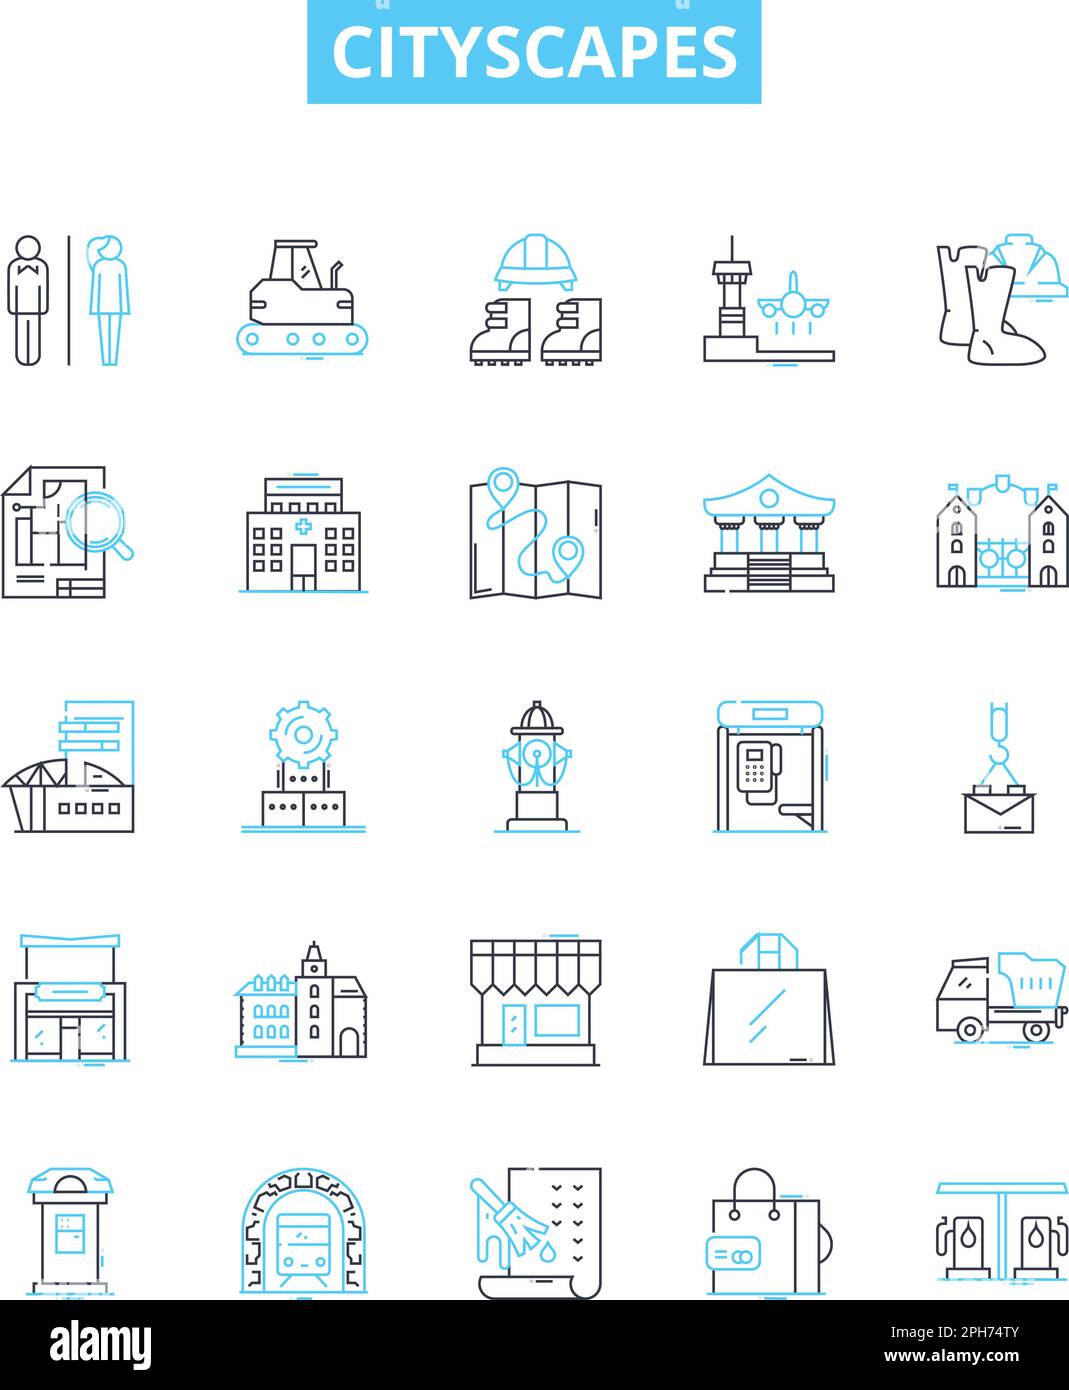 Cityscapes vector line icons set. Urban, skyline, metropolis, metropolises, vista, architecture, buildings illustration outline concept symbols and Stock Vector